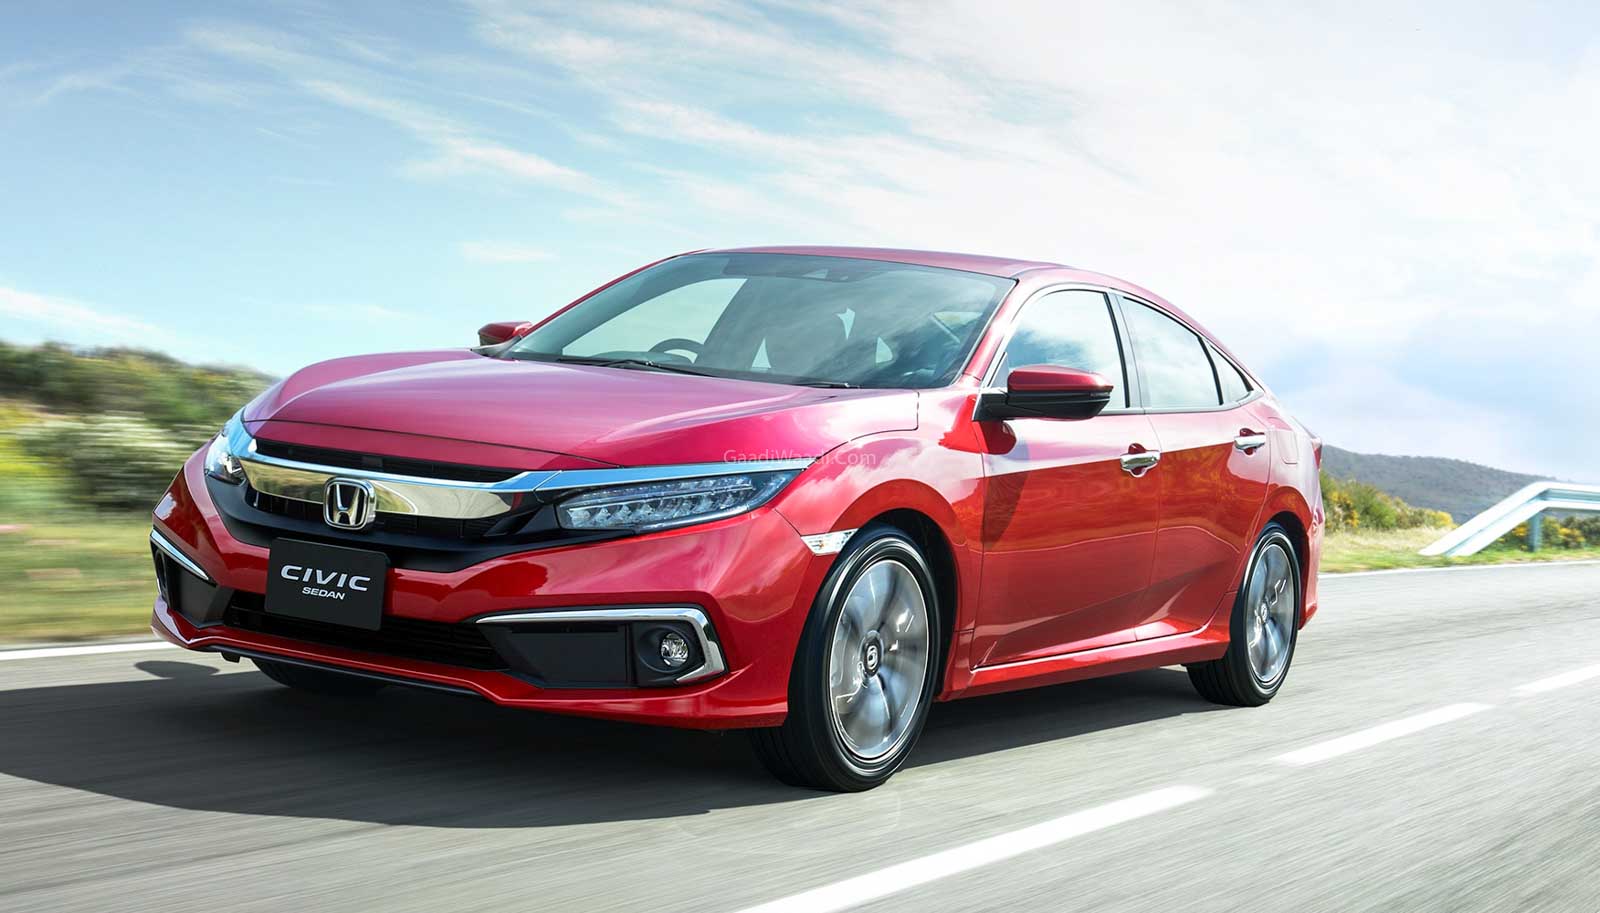 Next Generation Honda Civic Global Debut Confirmed For 21